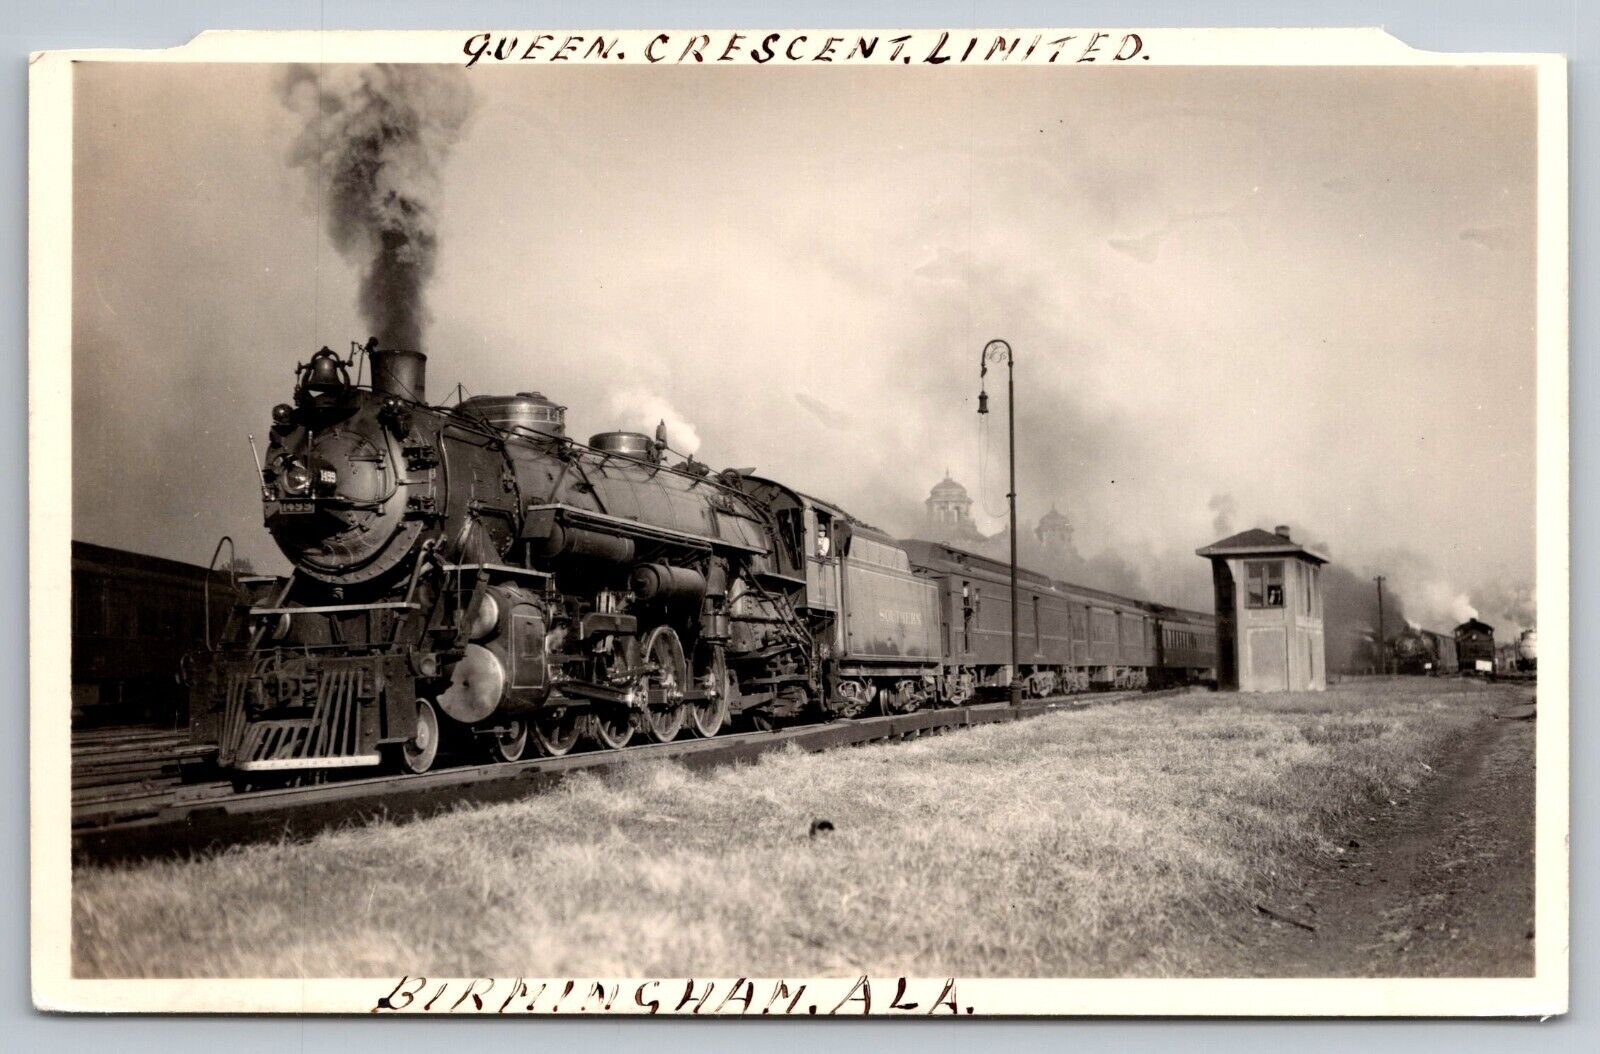 Queen Crescent Limited. Birmingham Alabama Train Real Photo Postcard. RPPC